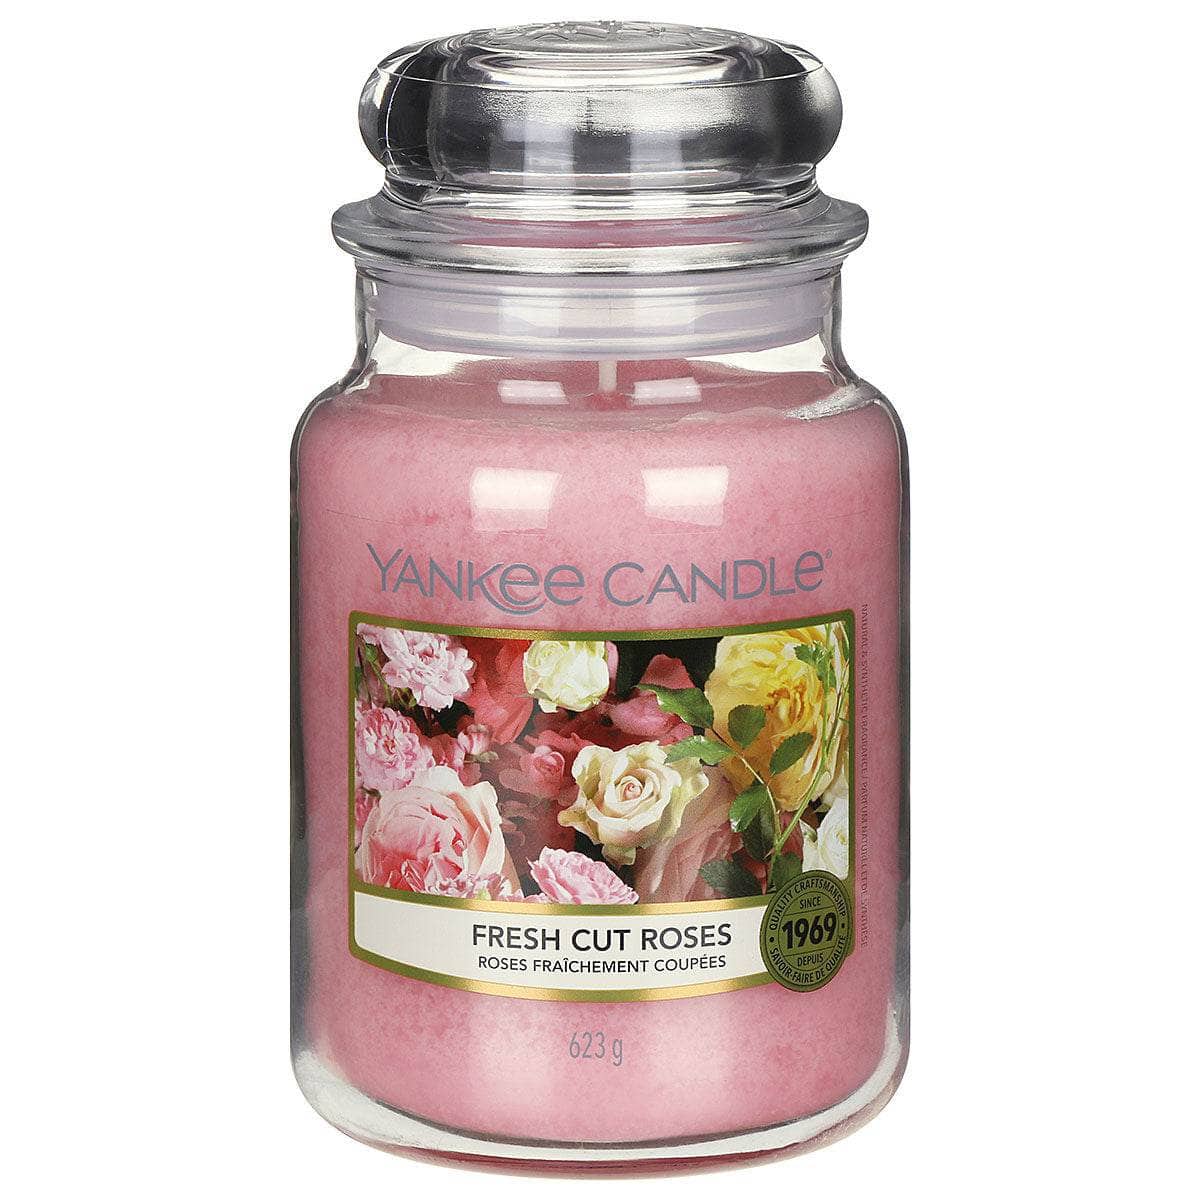  -  Yankee Candle Classic Large Jar - Fresh Cut Roses  -  50155198